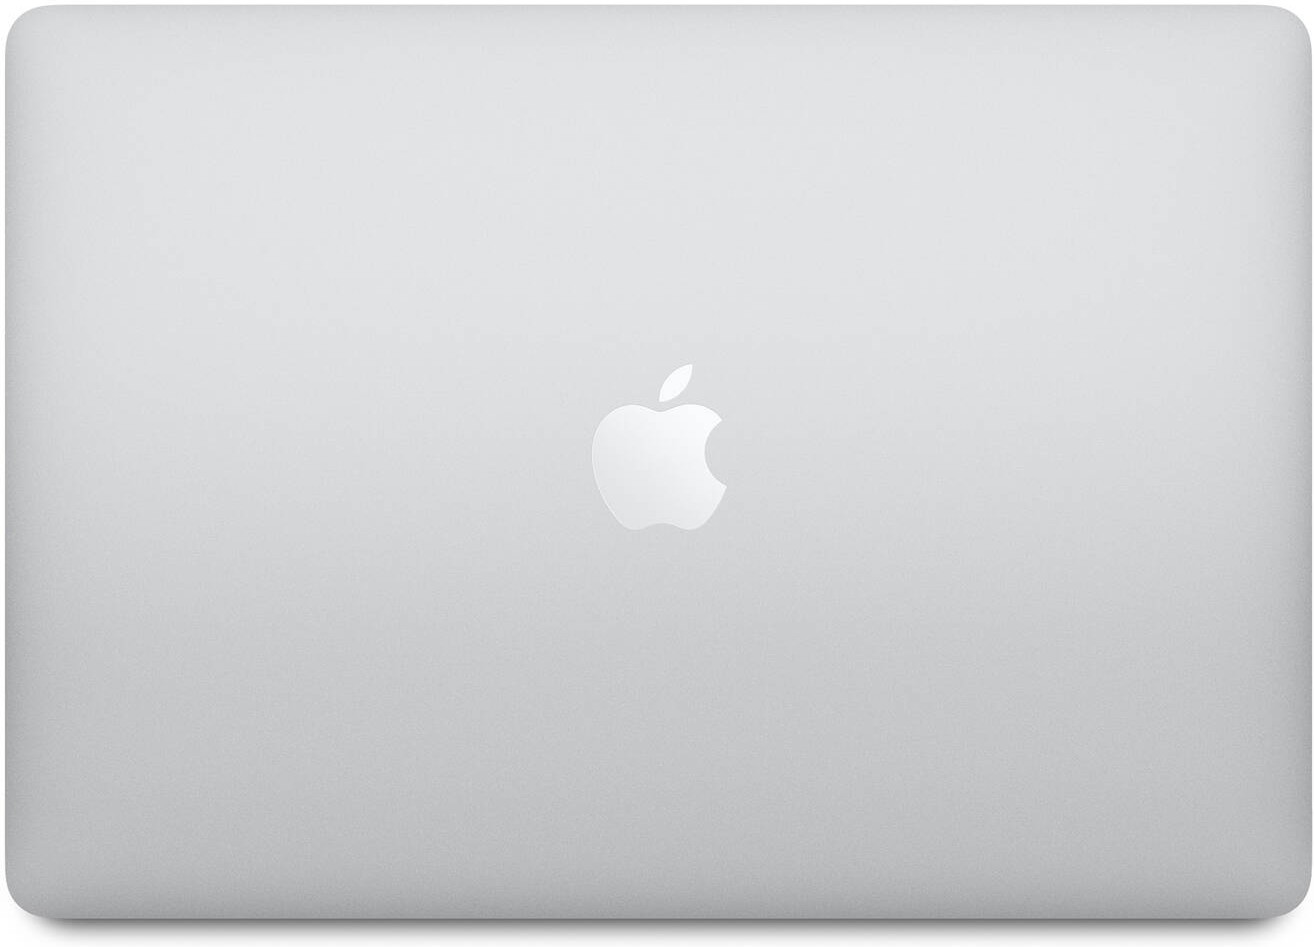 apple macbook pro concours